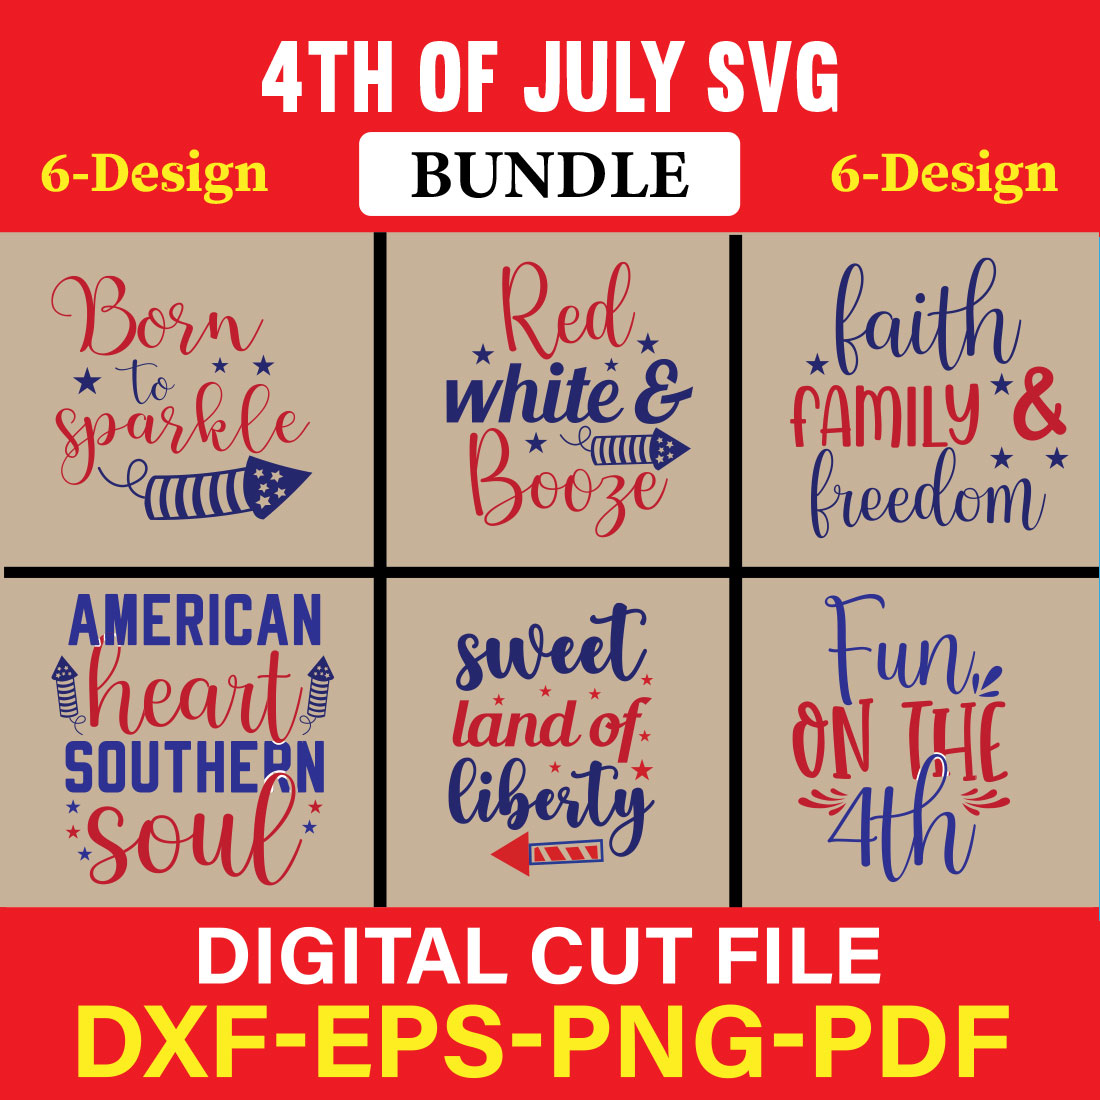 4th of July SVG Bundle, July 4th SVG, Fourth of July SVG Vol-05 cover image.